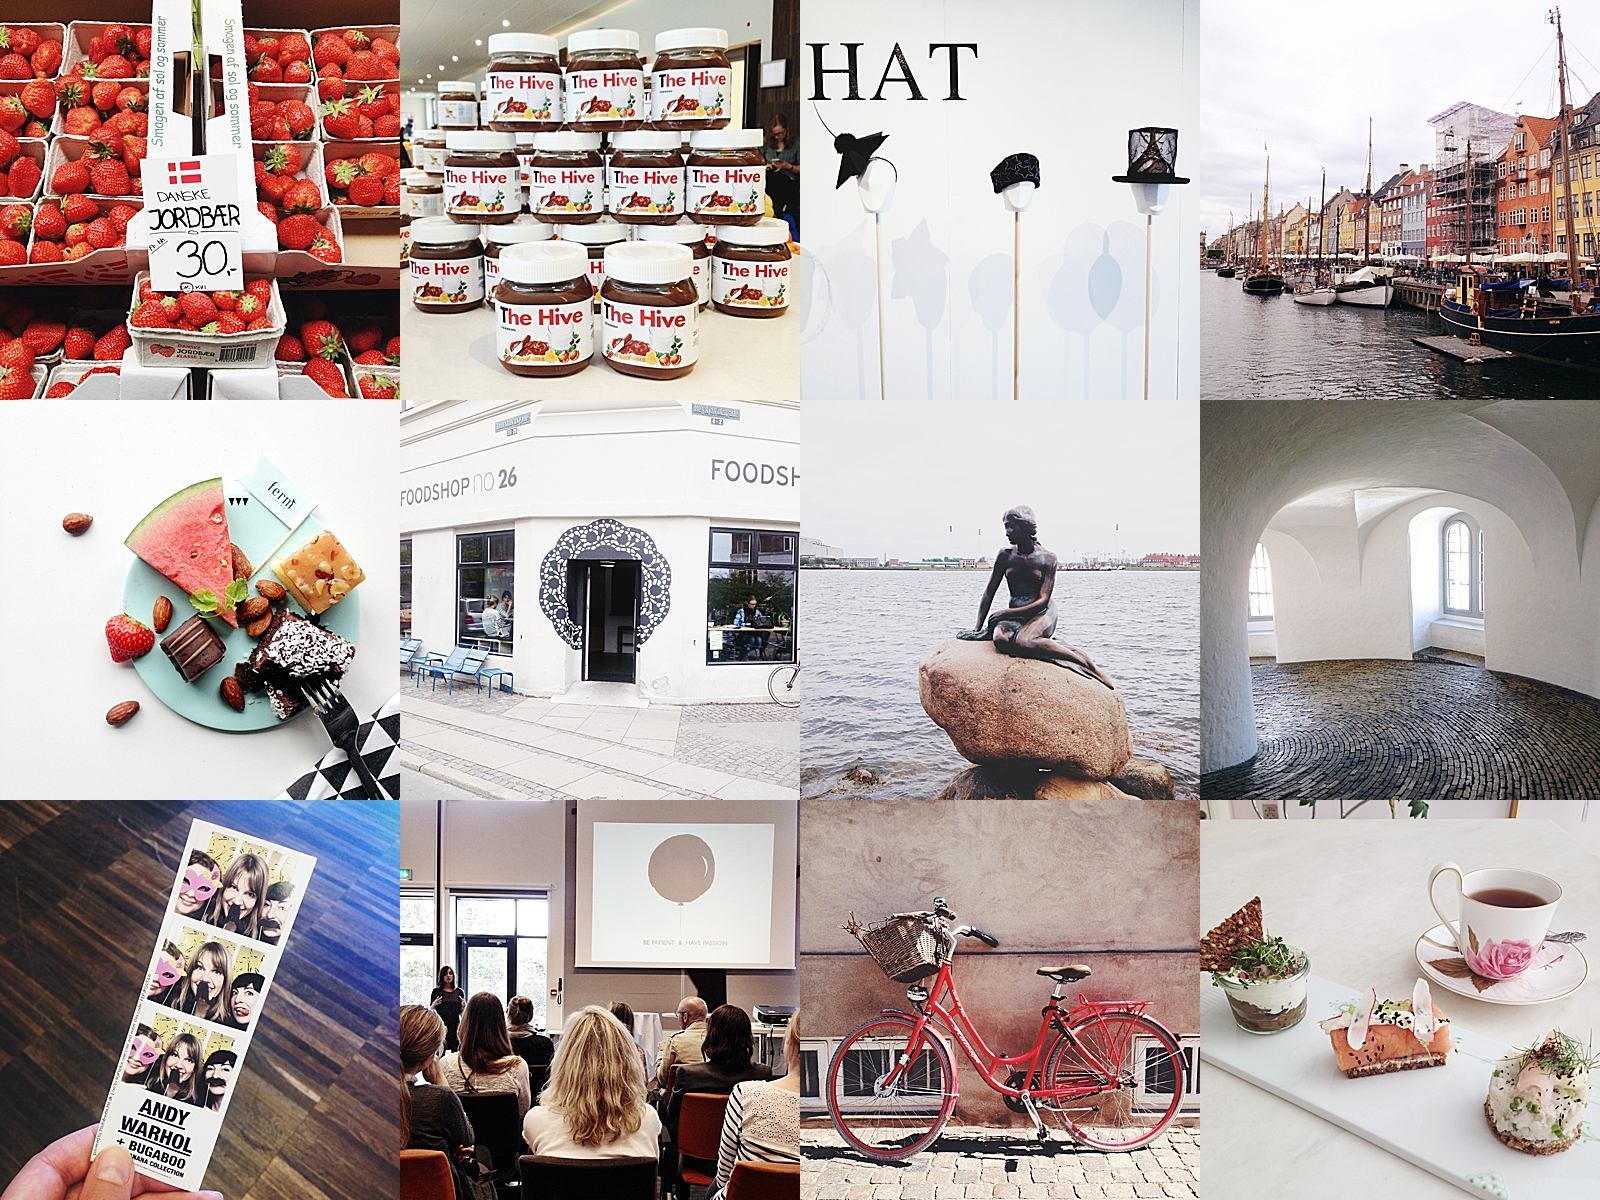 Copenhagen and The Hive on Instagram